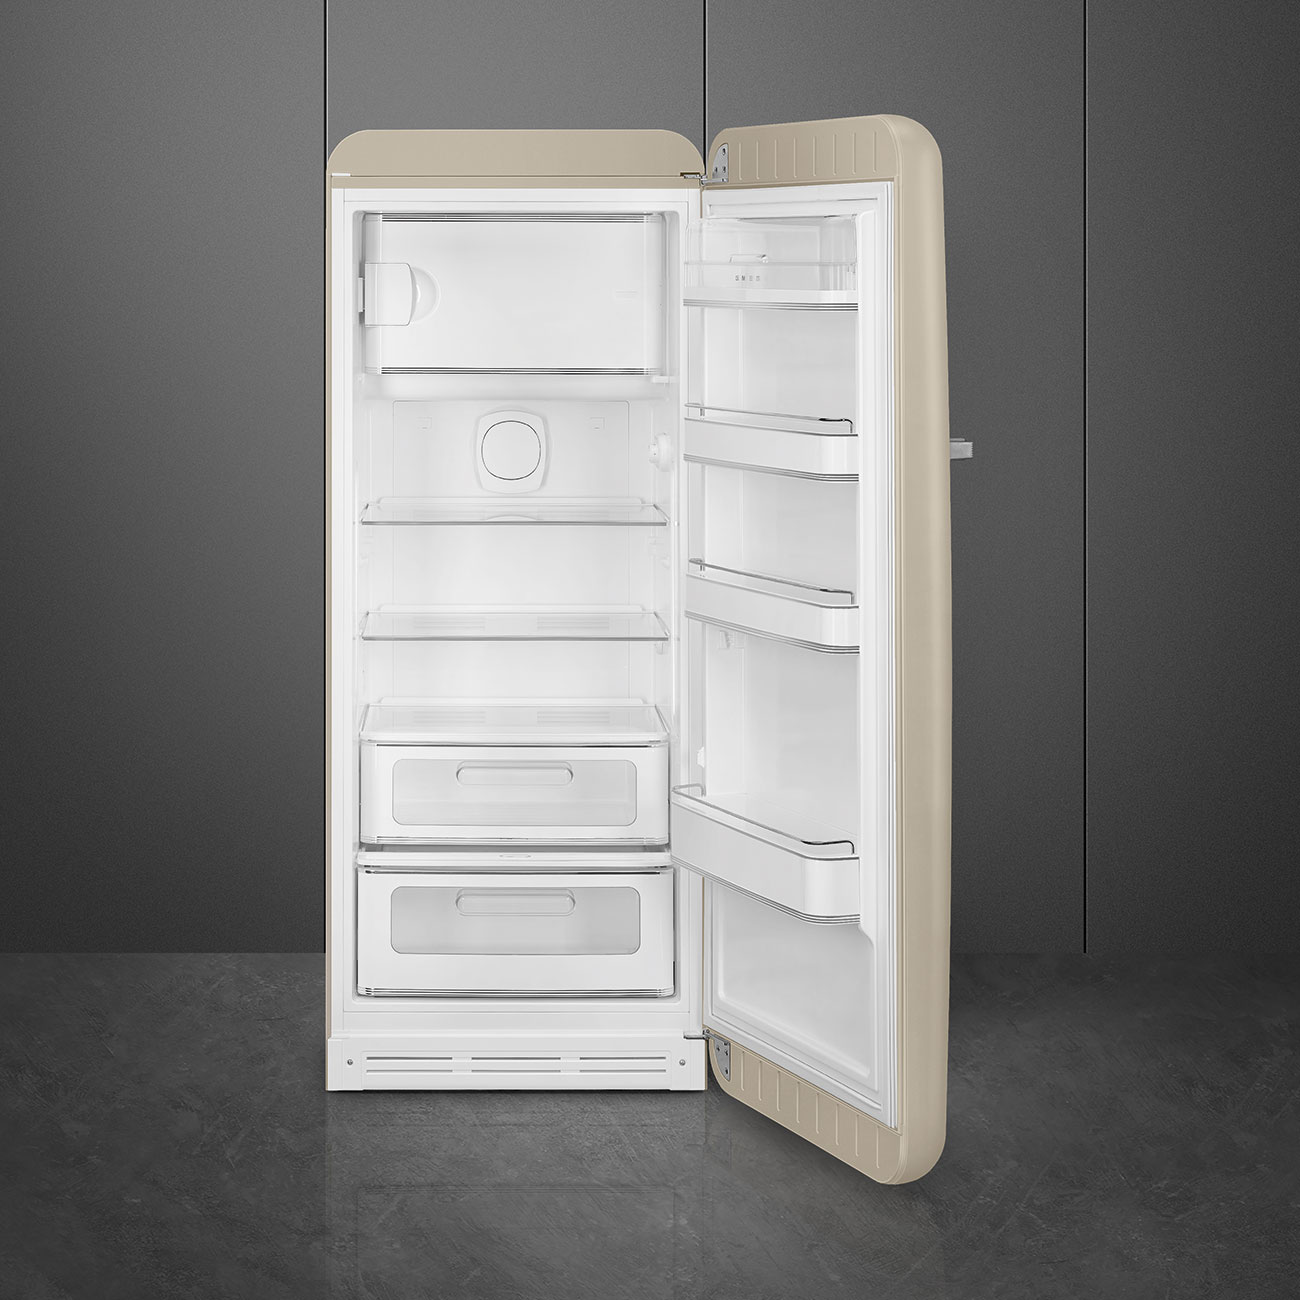 Perfectly Pale refrigerator - Smeg_4